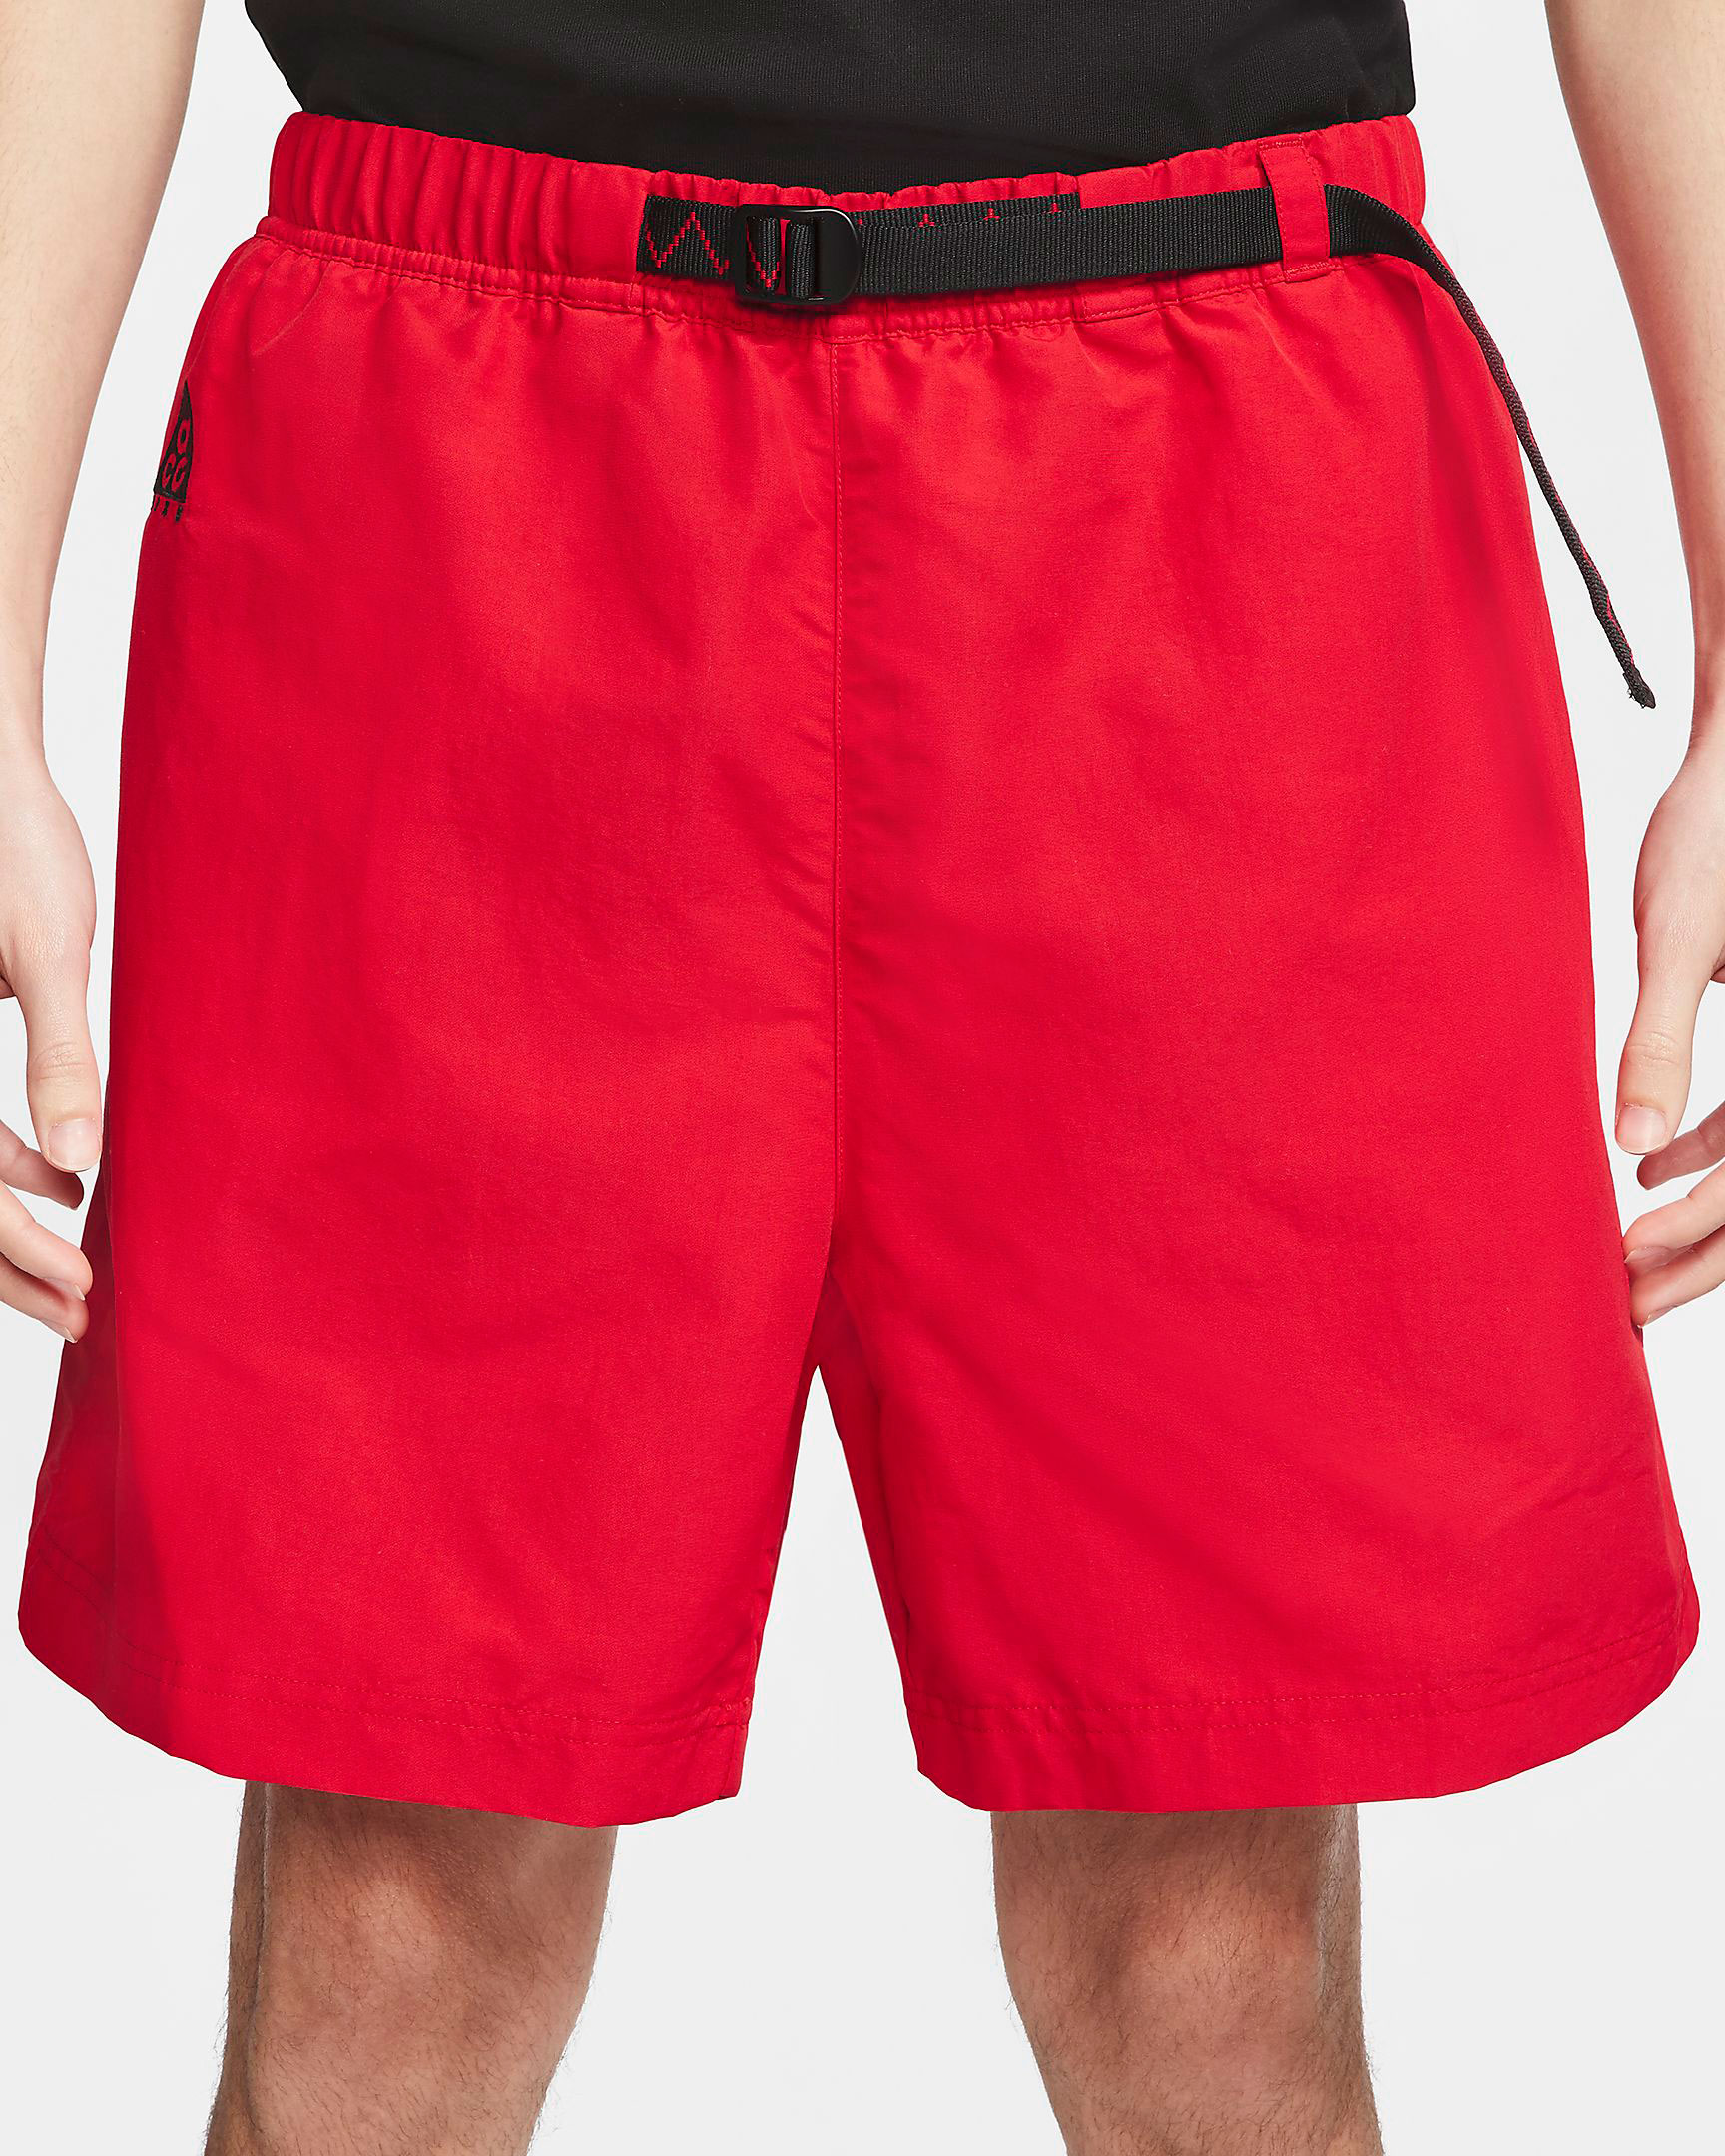 nike-acg-shorts-red